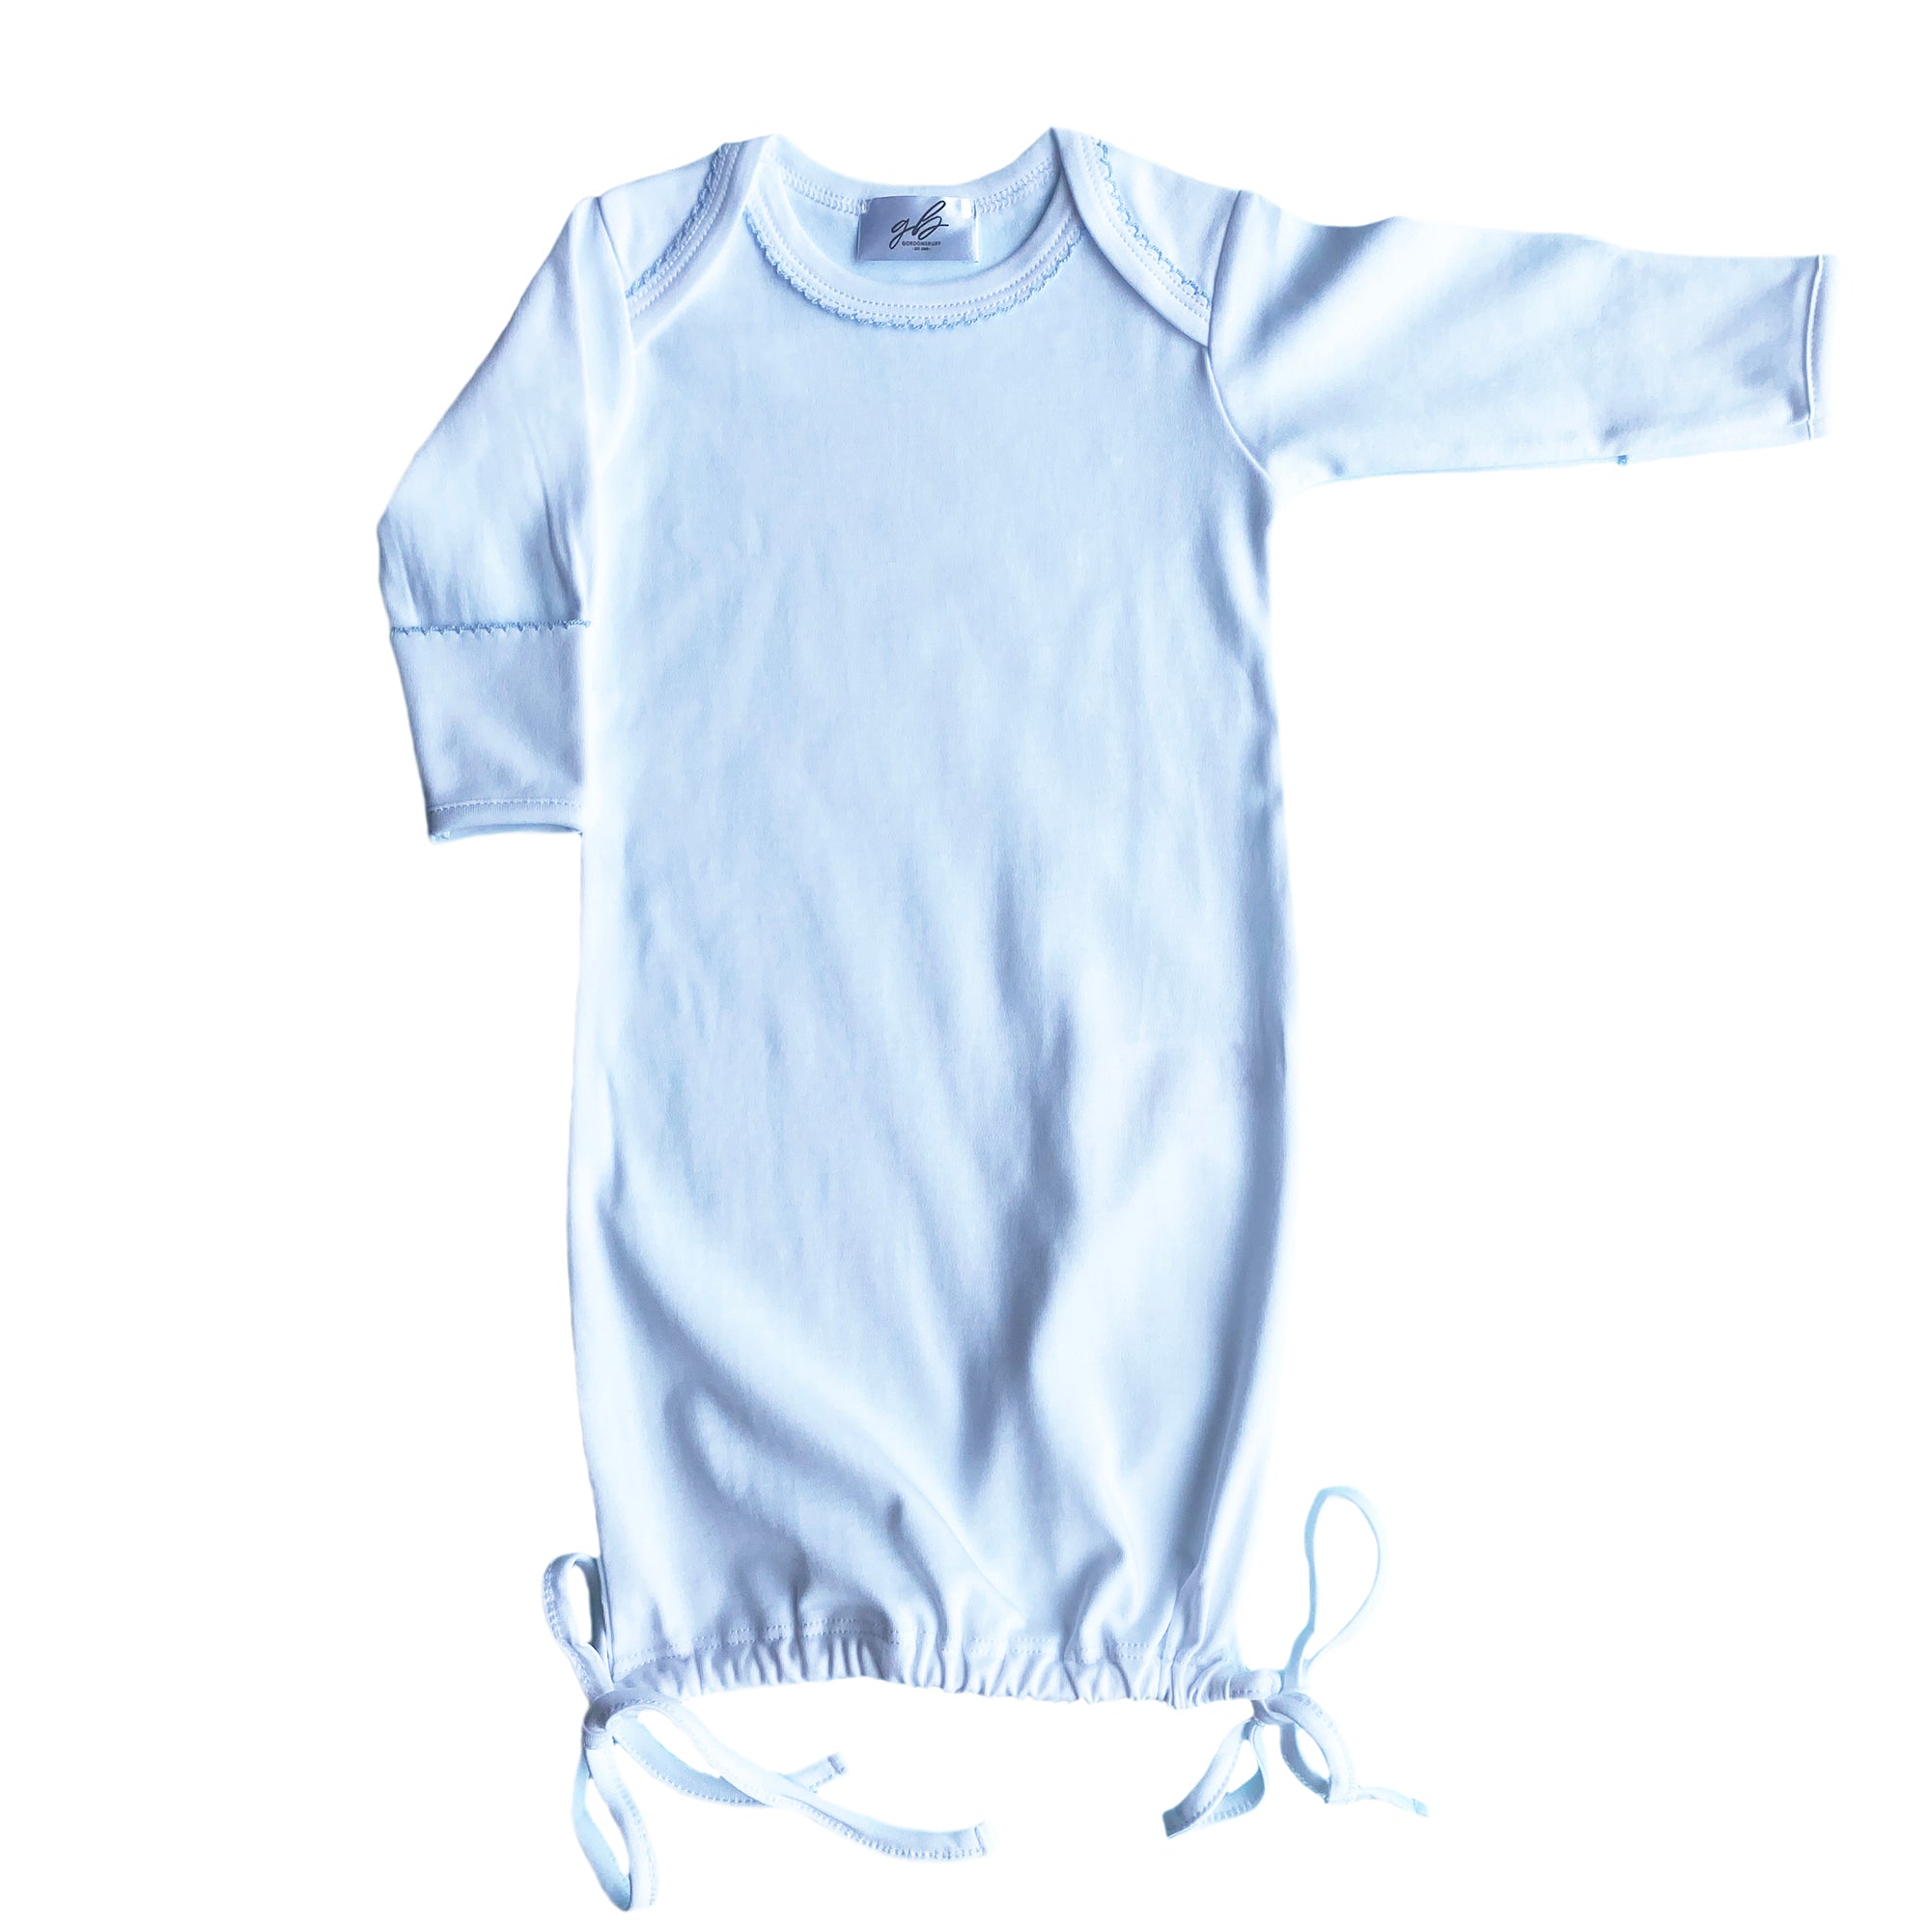 Newborn Sleepsack With Blue Picot Trim